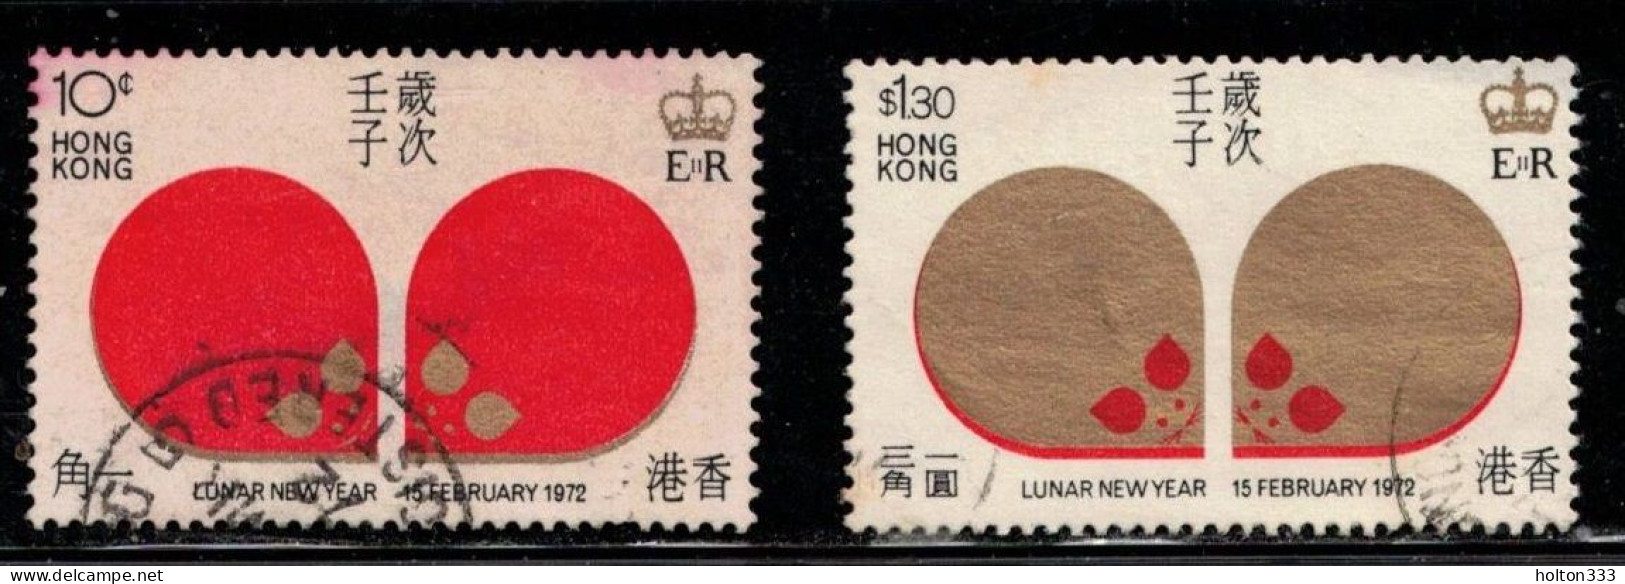 HONG KONG Scott # 268-9 Used - Lunar New Year 1972 - Usati